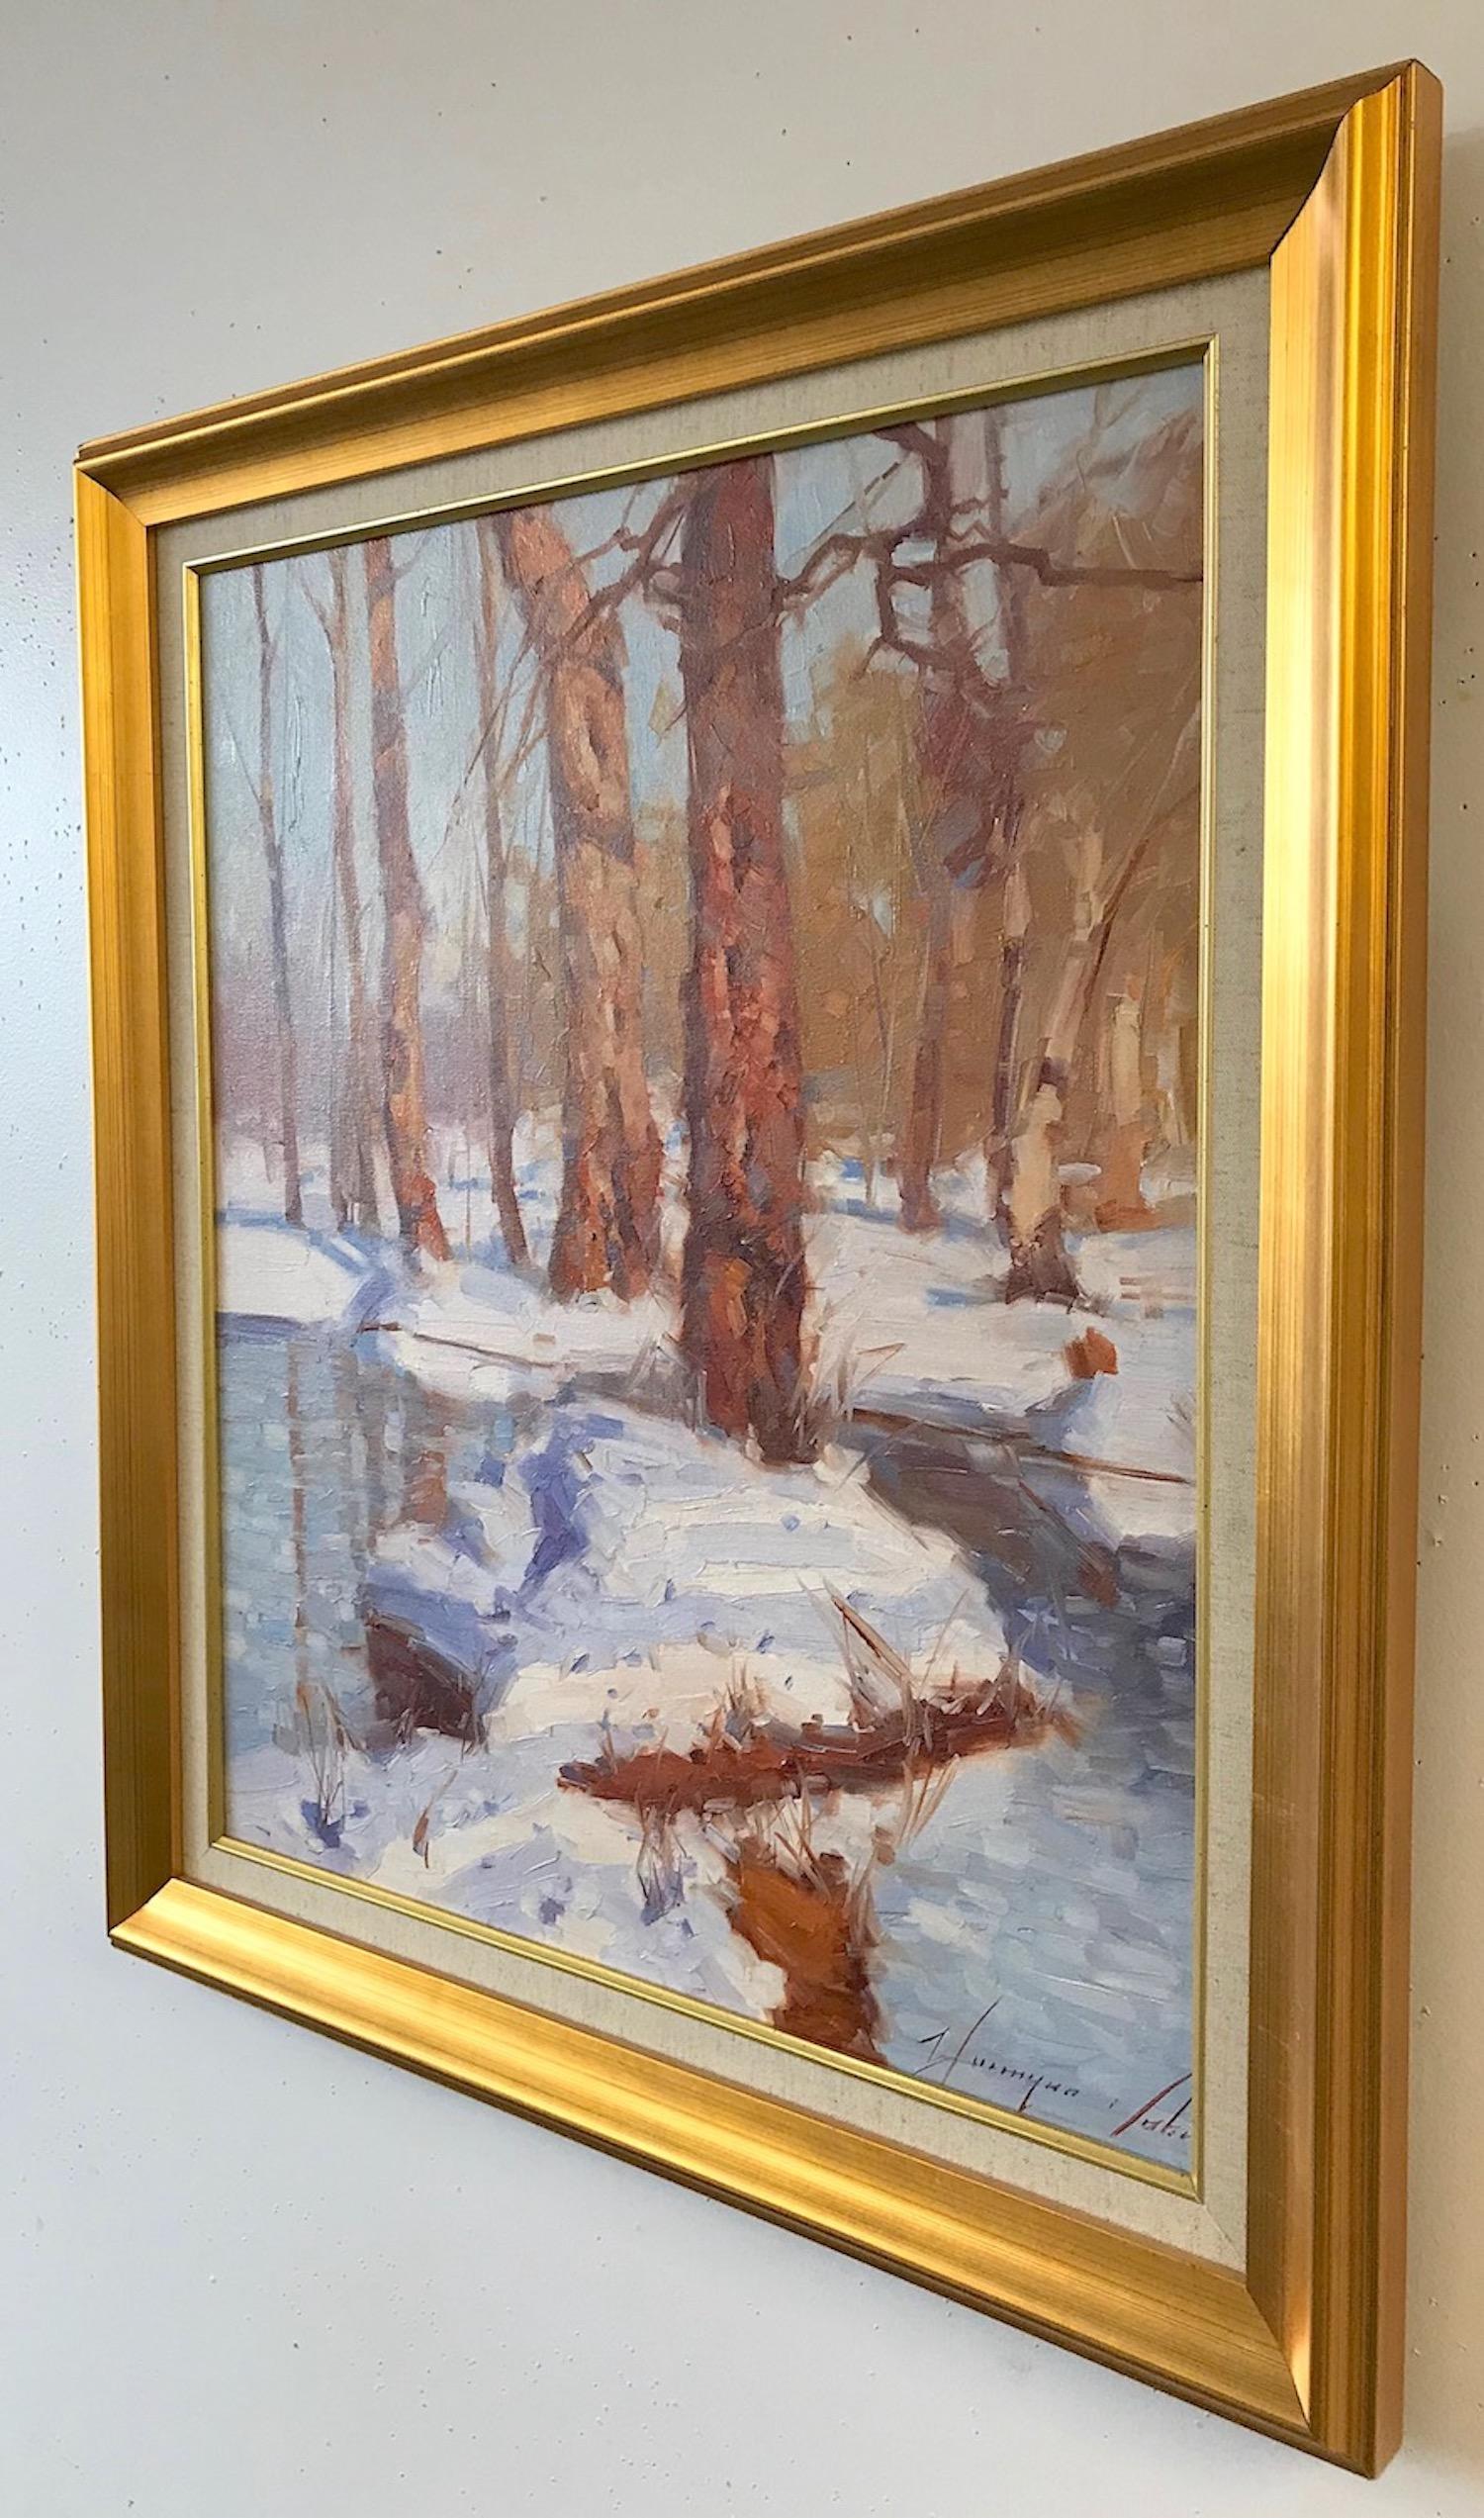 ARTIST: Vahe Yeremyan
WORK: Original Oil Painting, Handmade Artwork, One of a Kind 
MEDIUM: Oil on Canvas 
YEAR: 2018
STYLE: Impressionism, 
SUBJECT: Sunny Winter
SIZE: 24